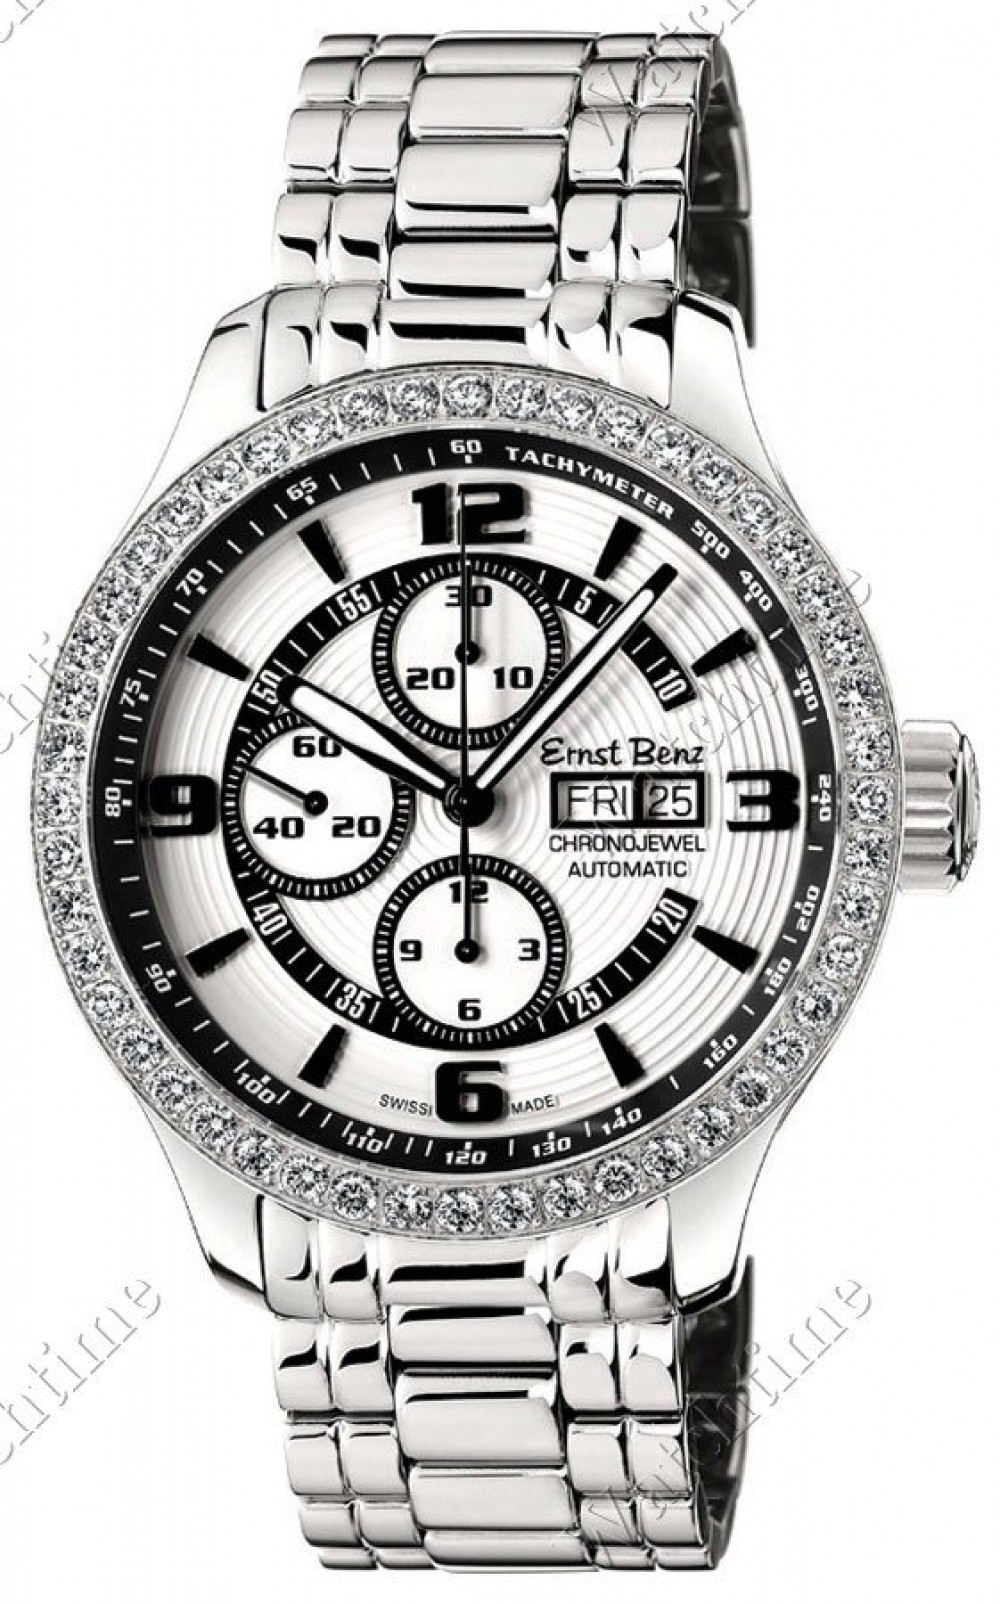 Zegarek firmy Benz Ernst, model ChronoJewel